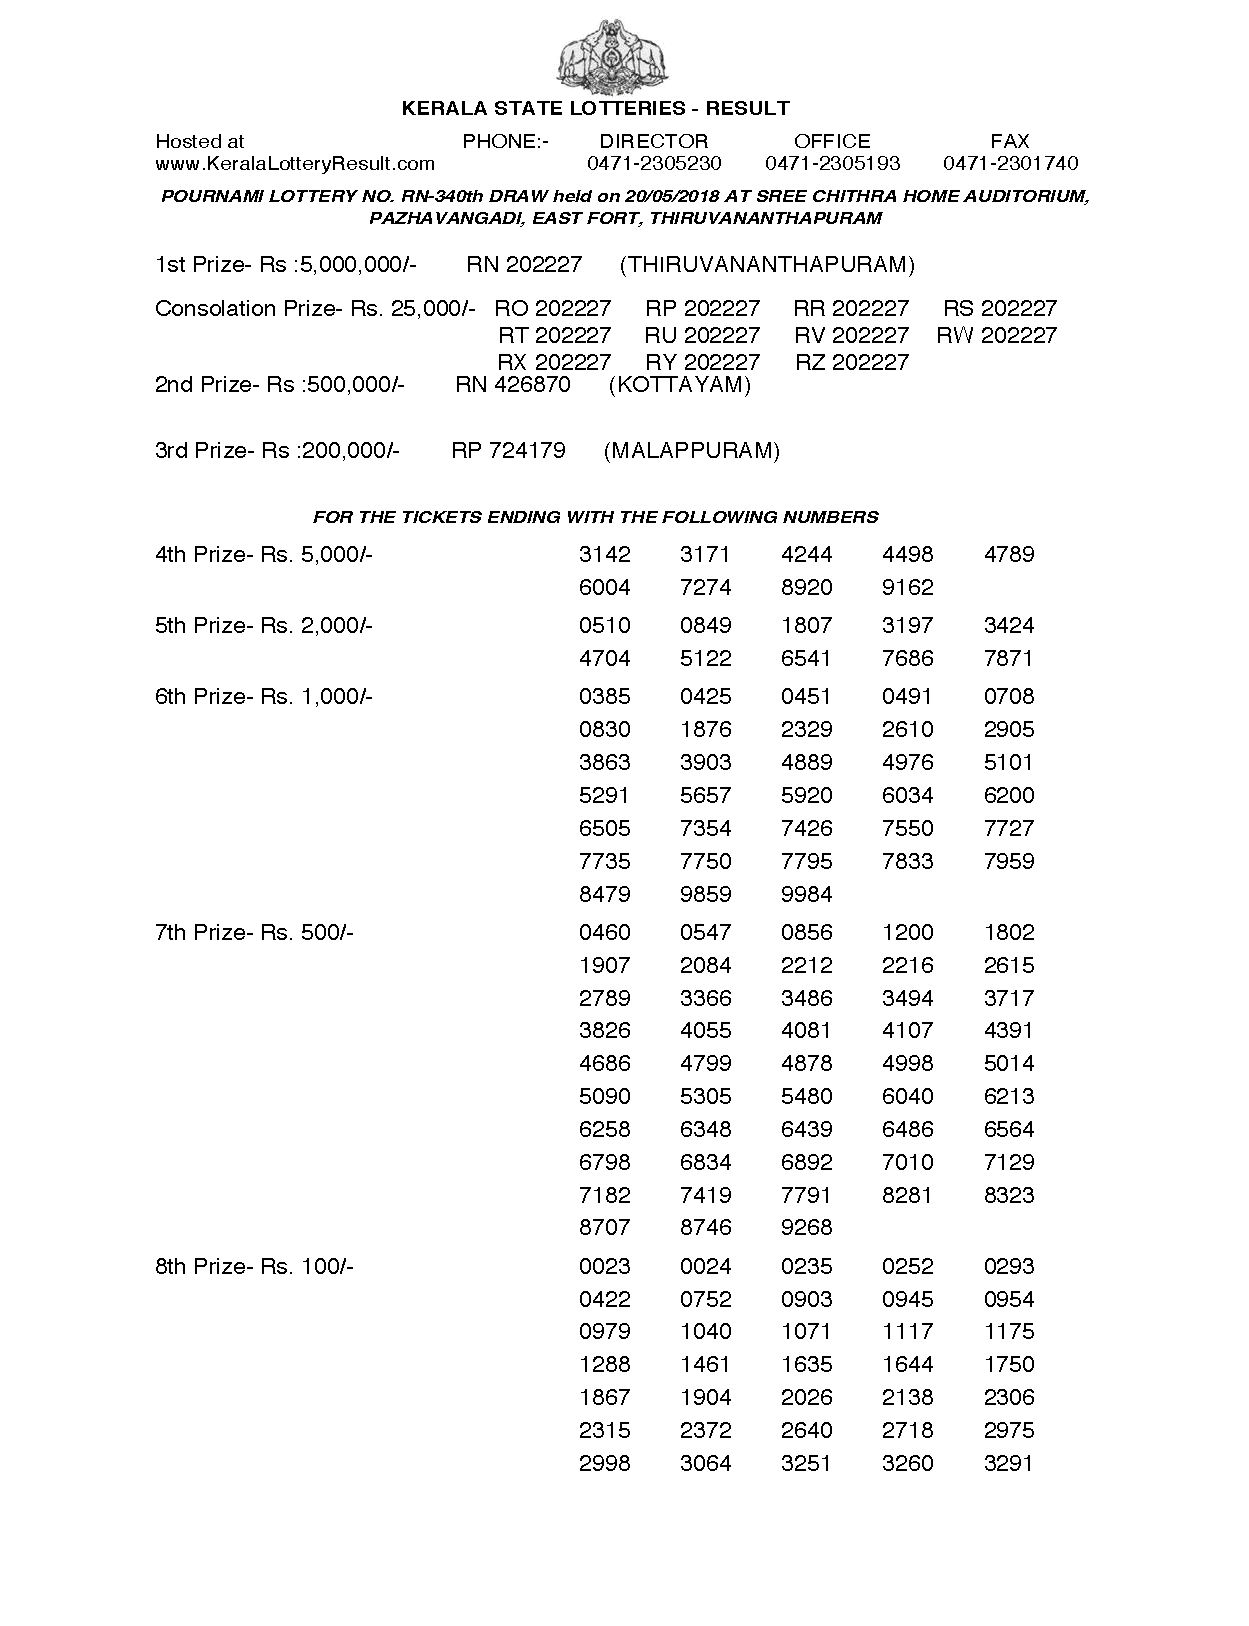 Pournami RN340 Kerala Lottery Results Screenshot: Page 1